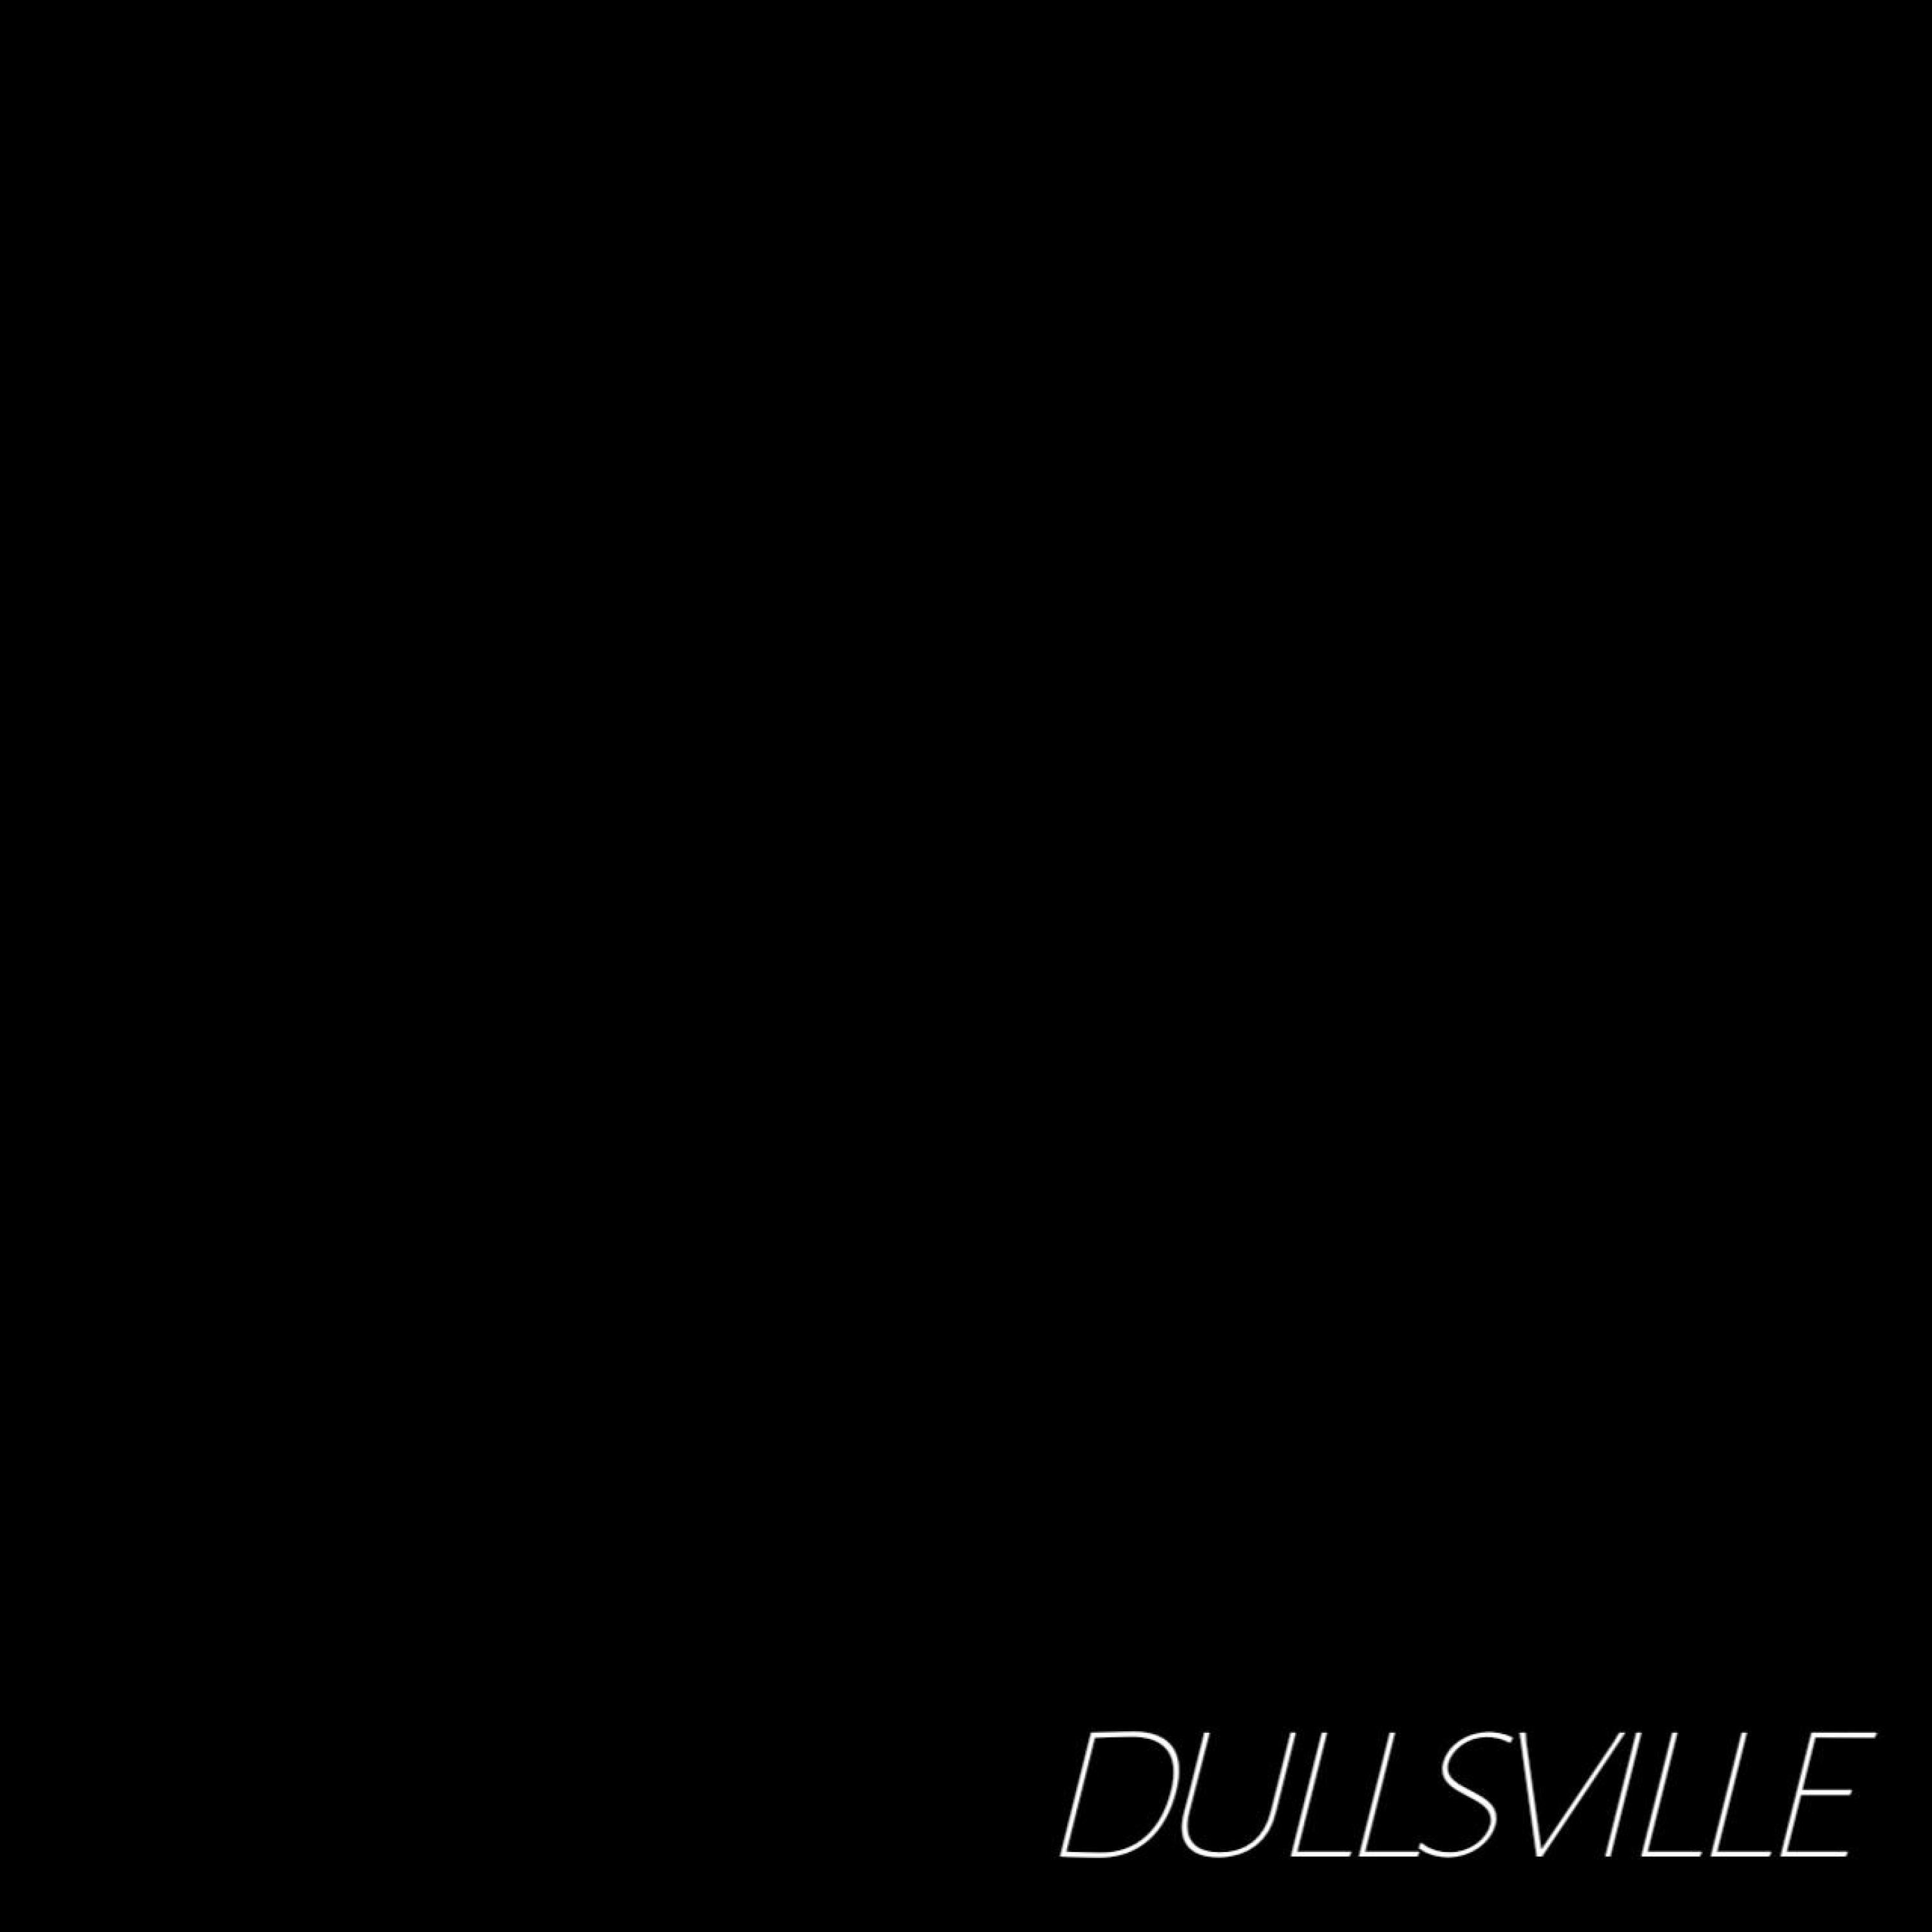 Galaxxy - dullsville